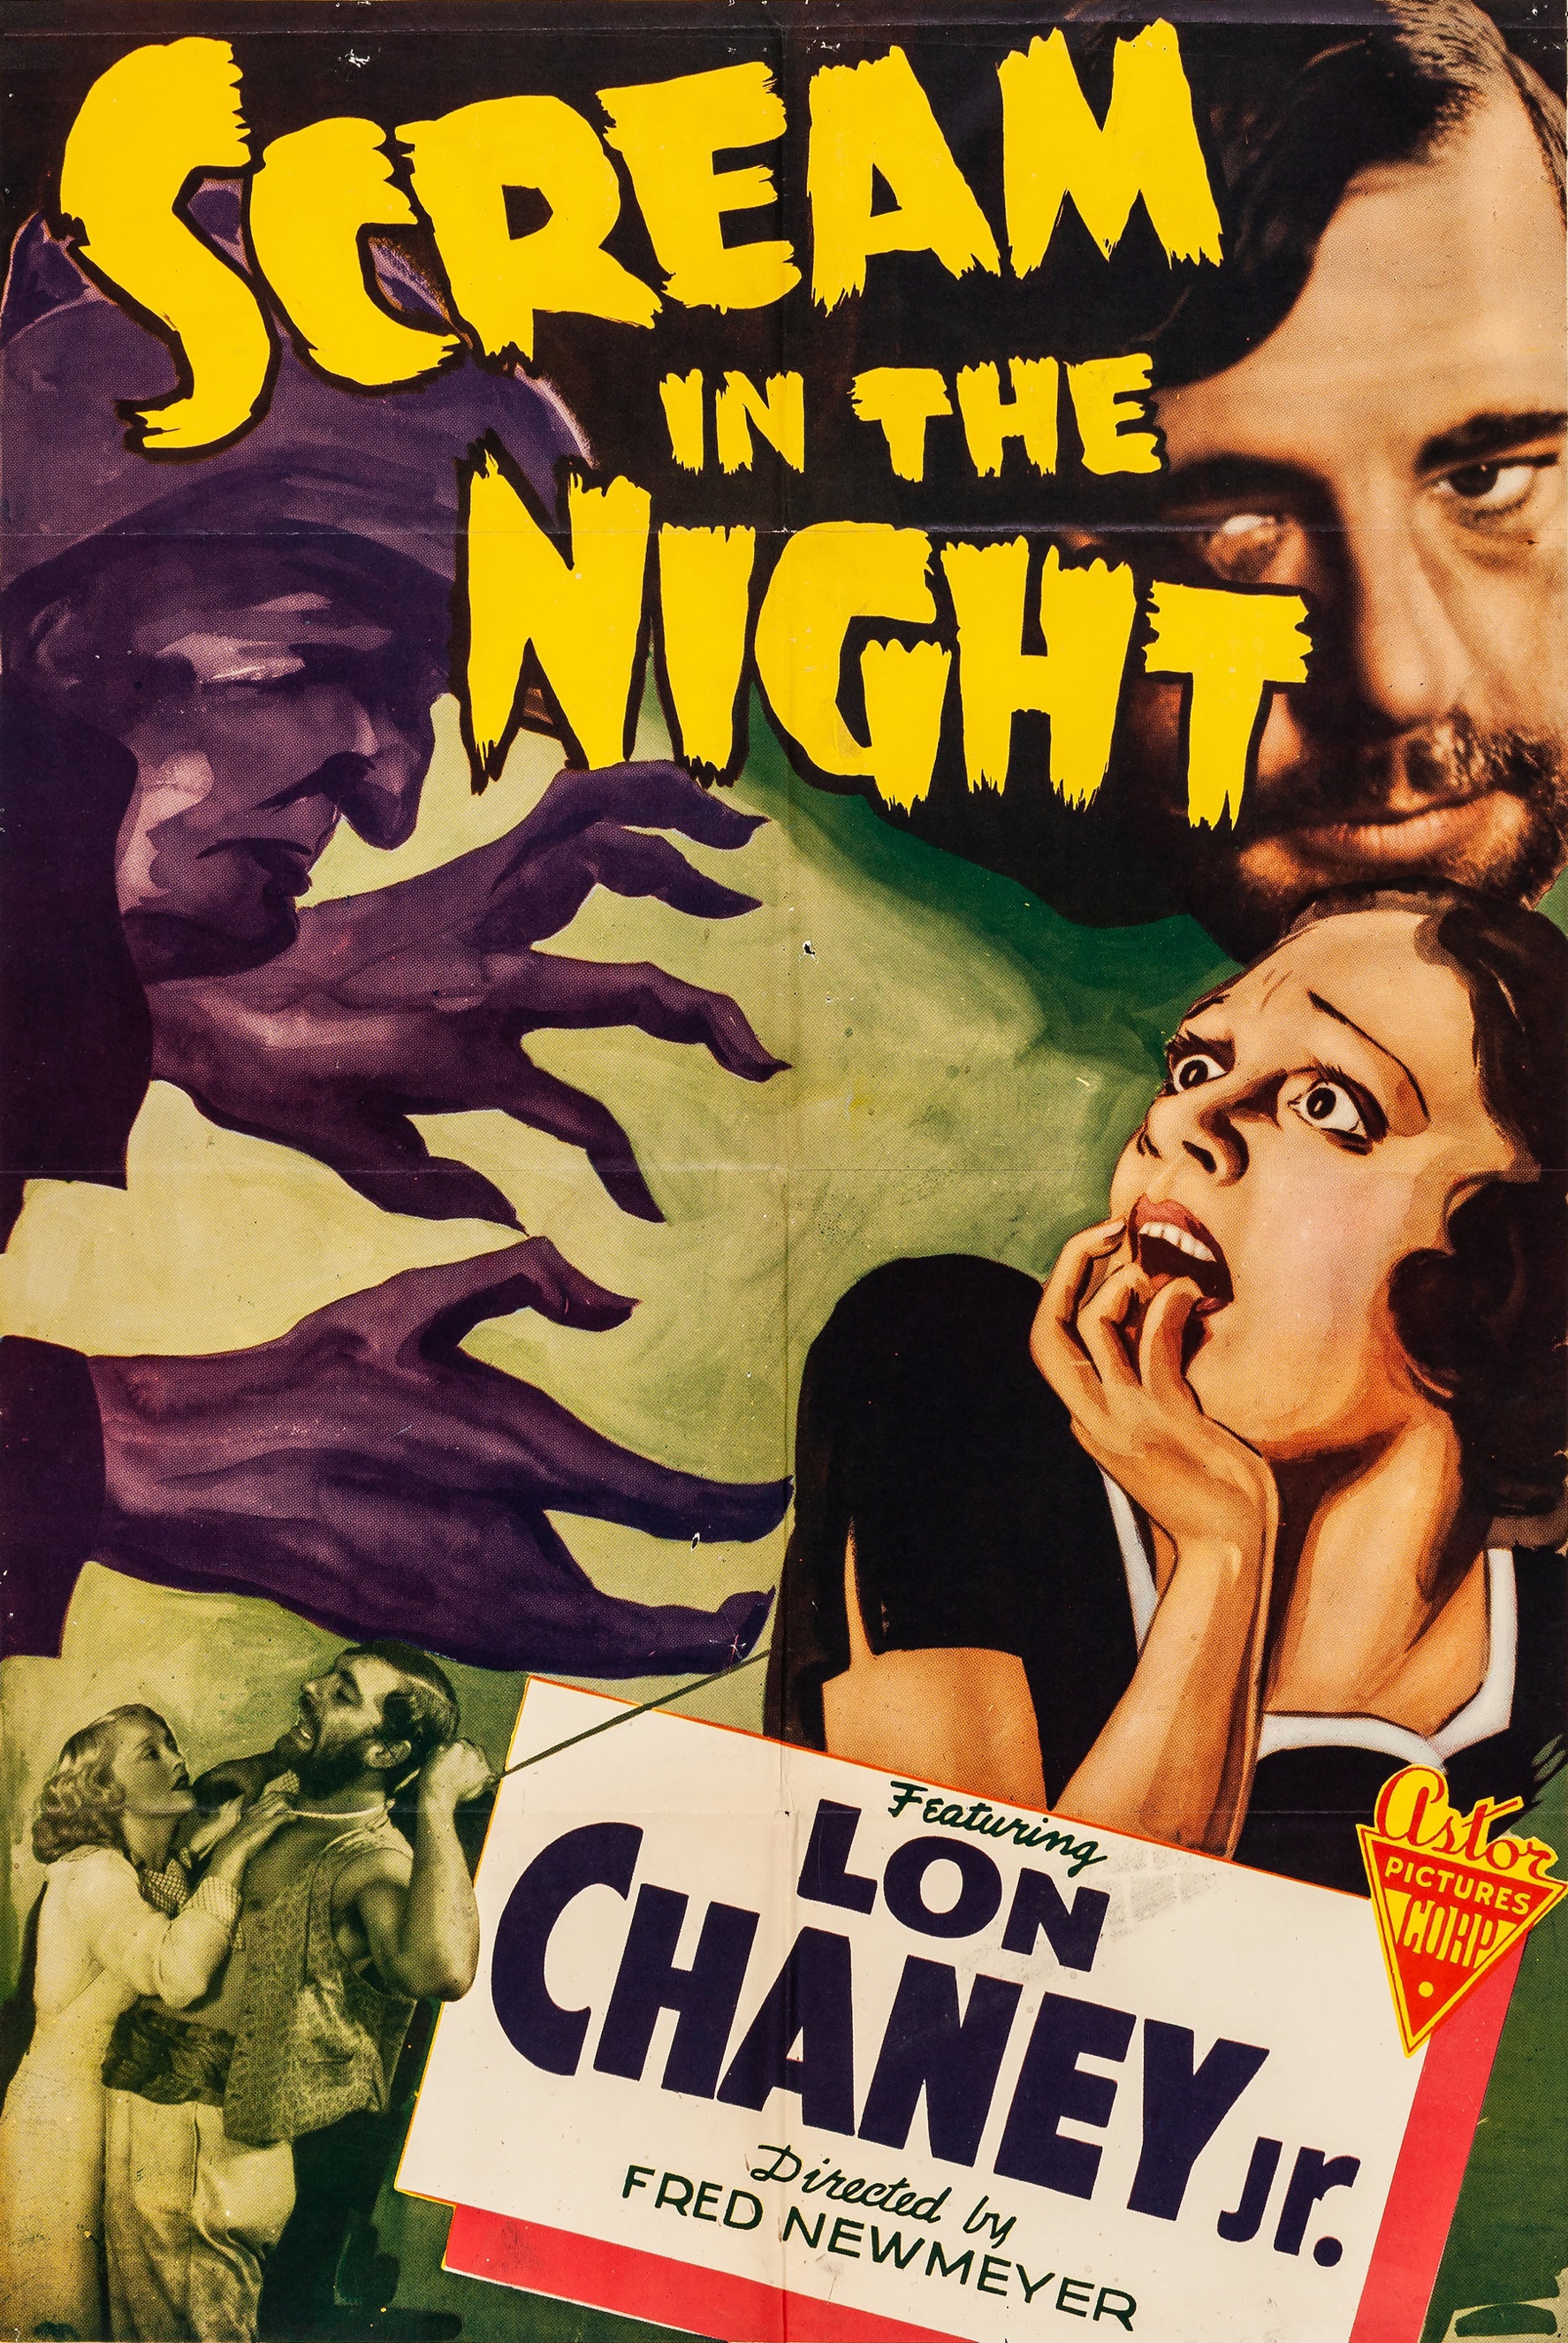 SCREAM IN THE NIGHT (1935)